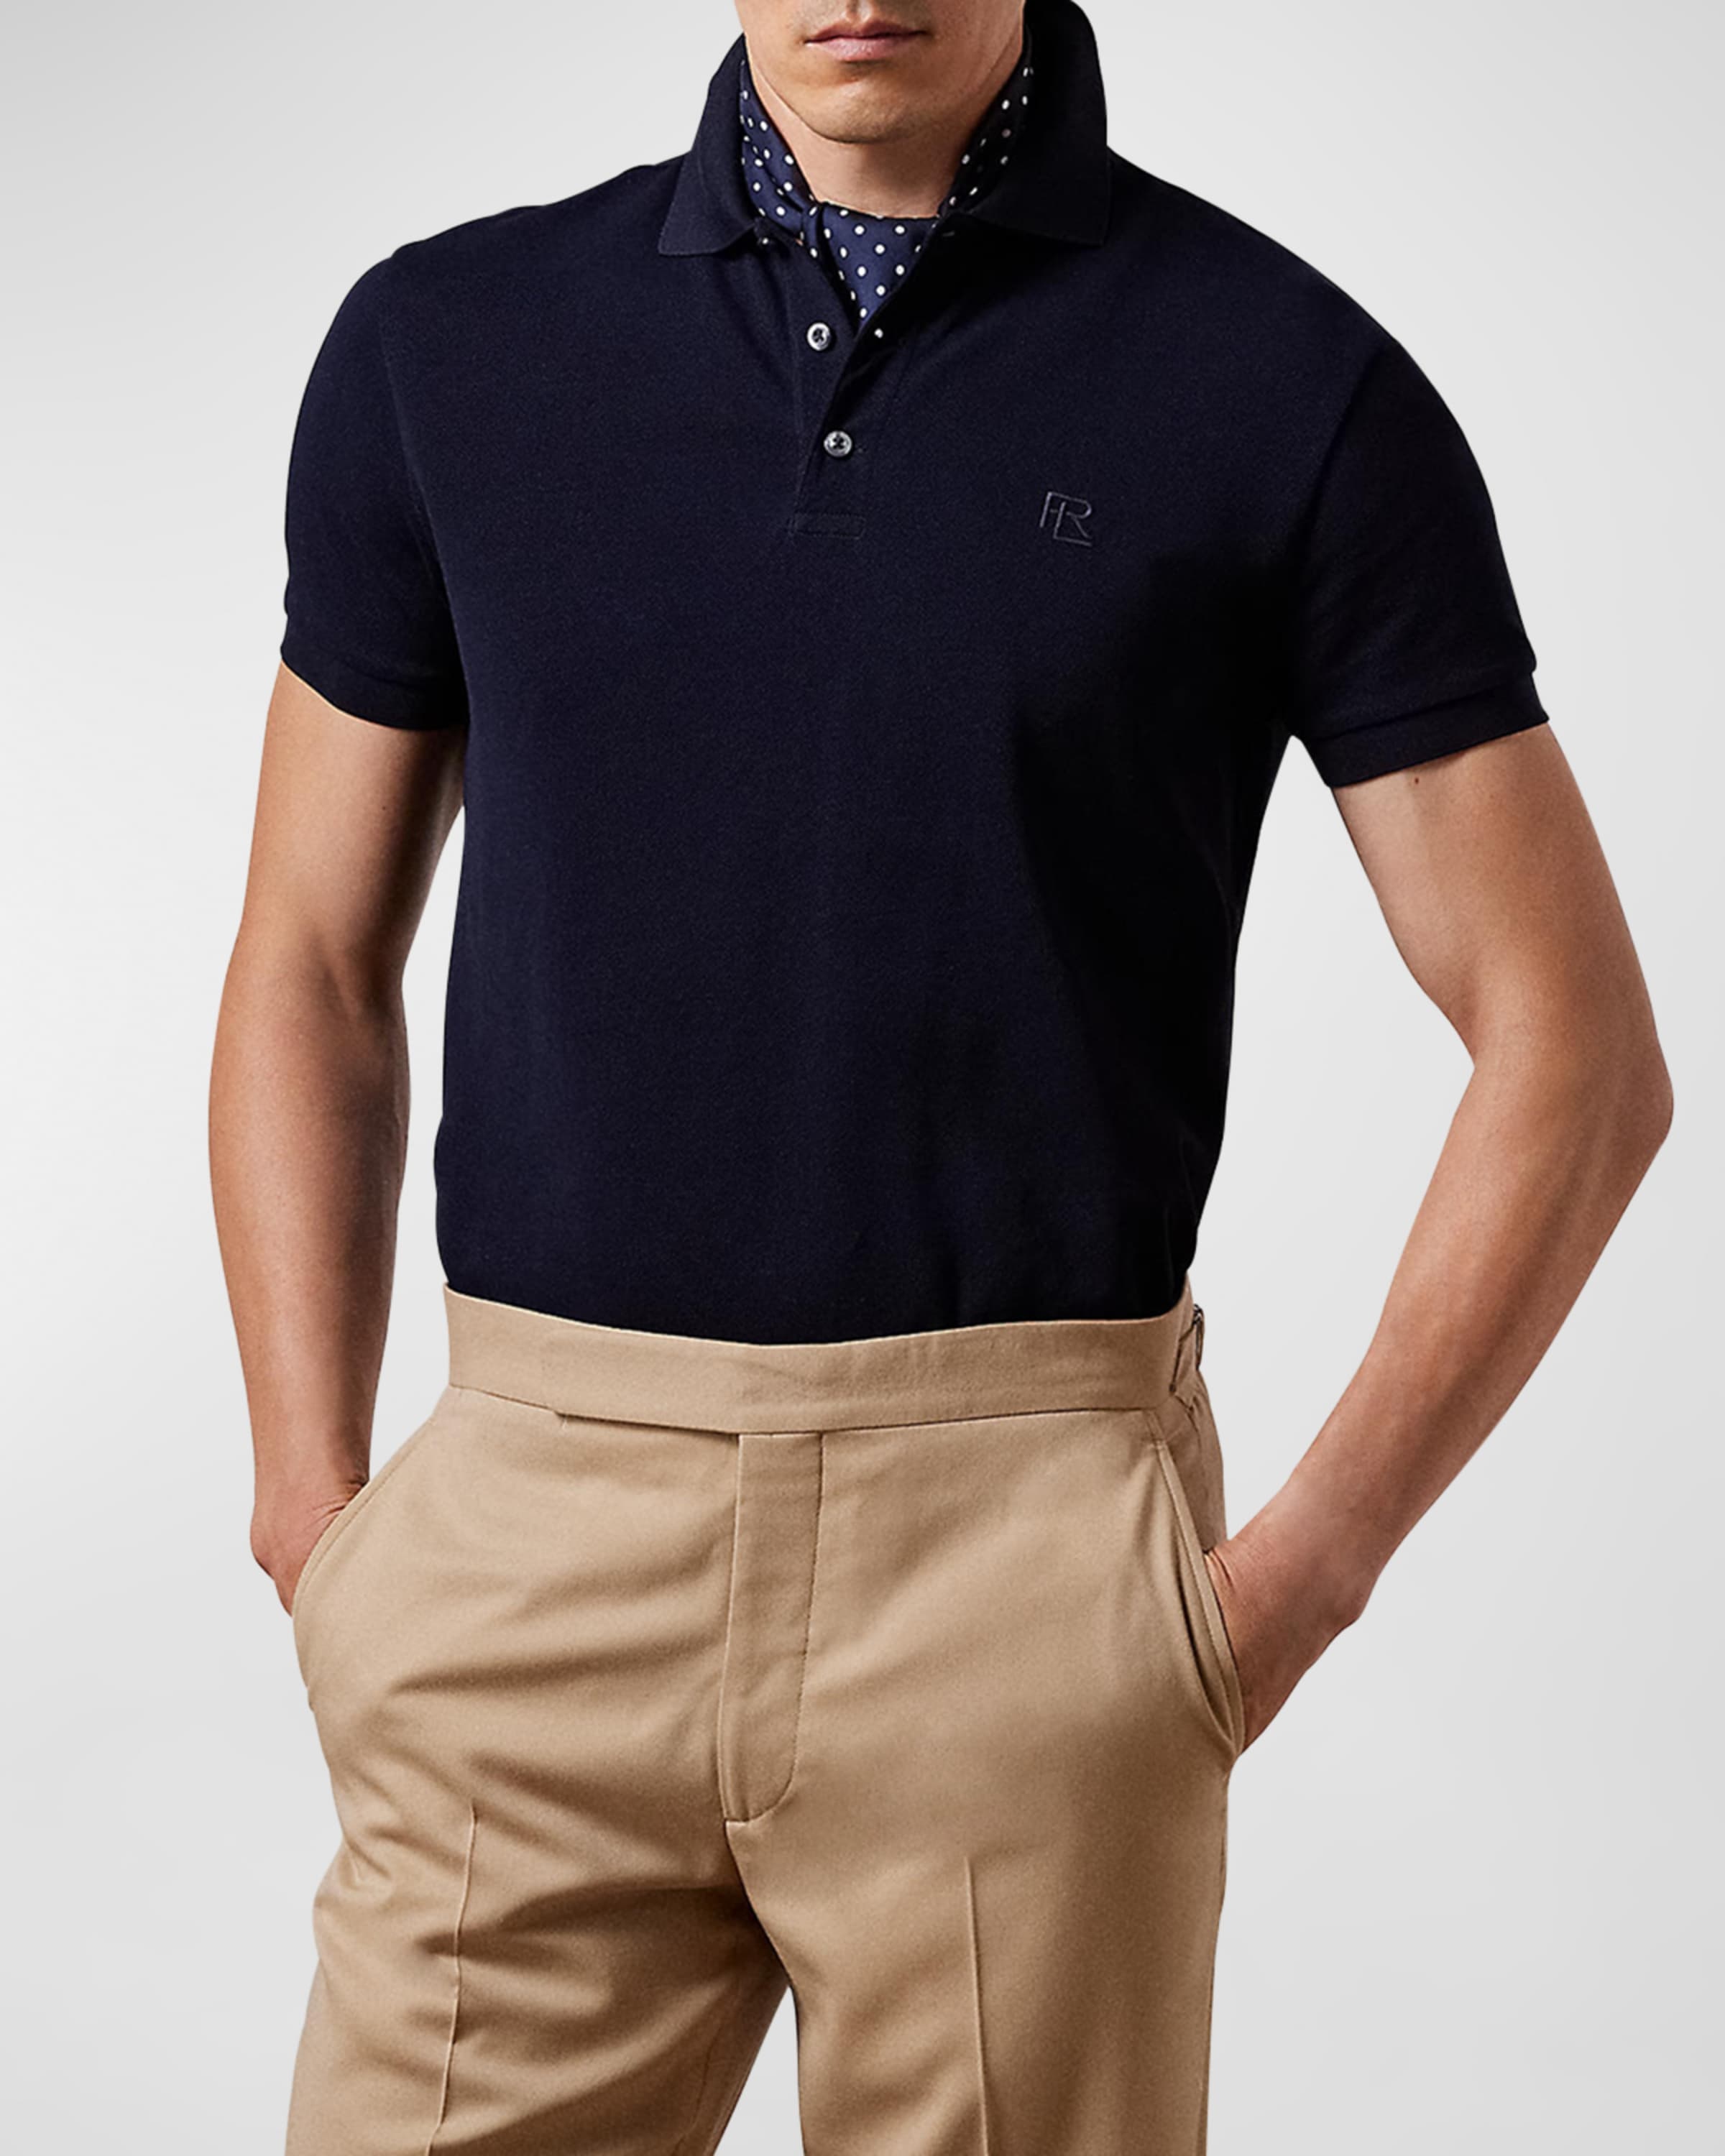 Men's Mercerized Pique Polo Shirt - 1